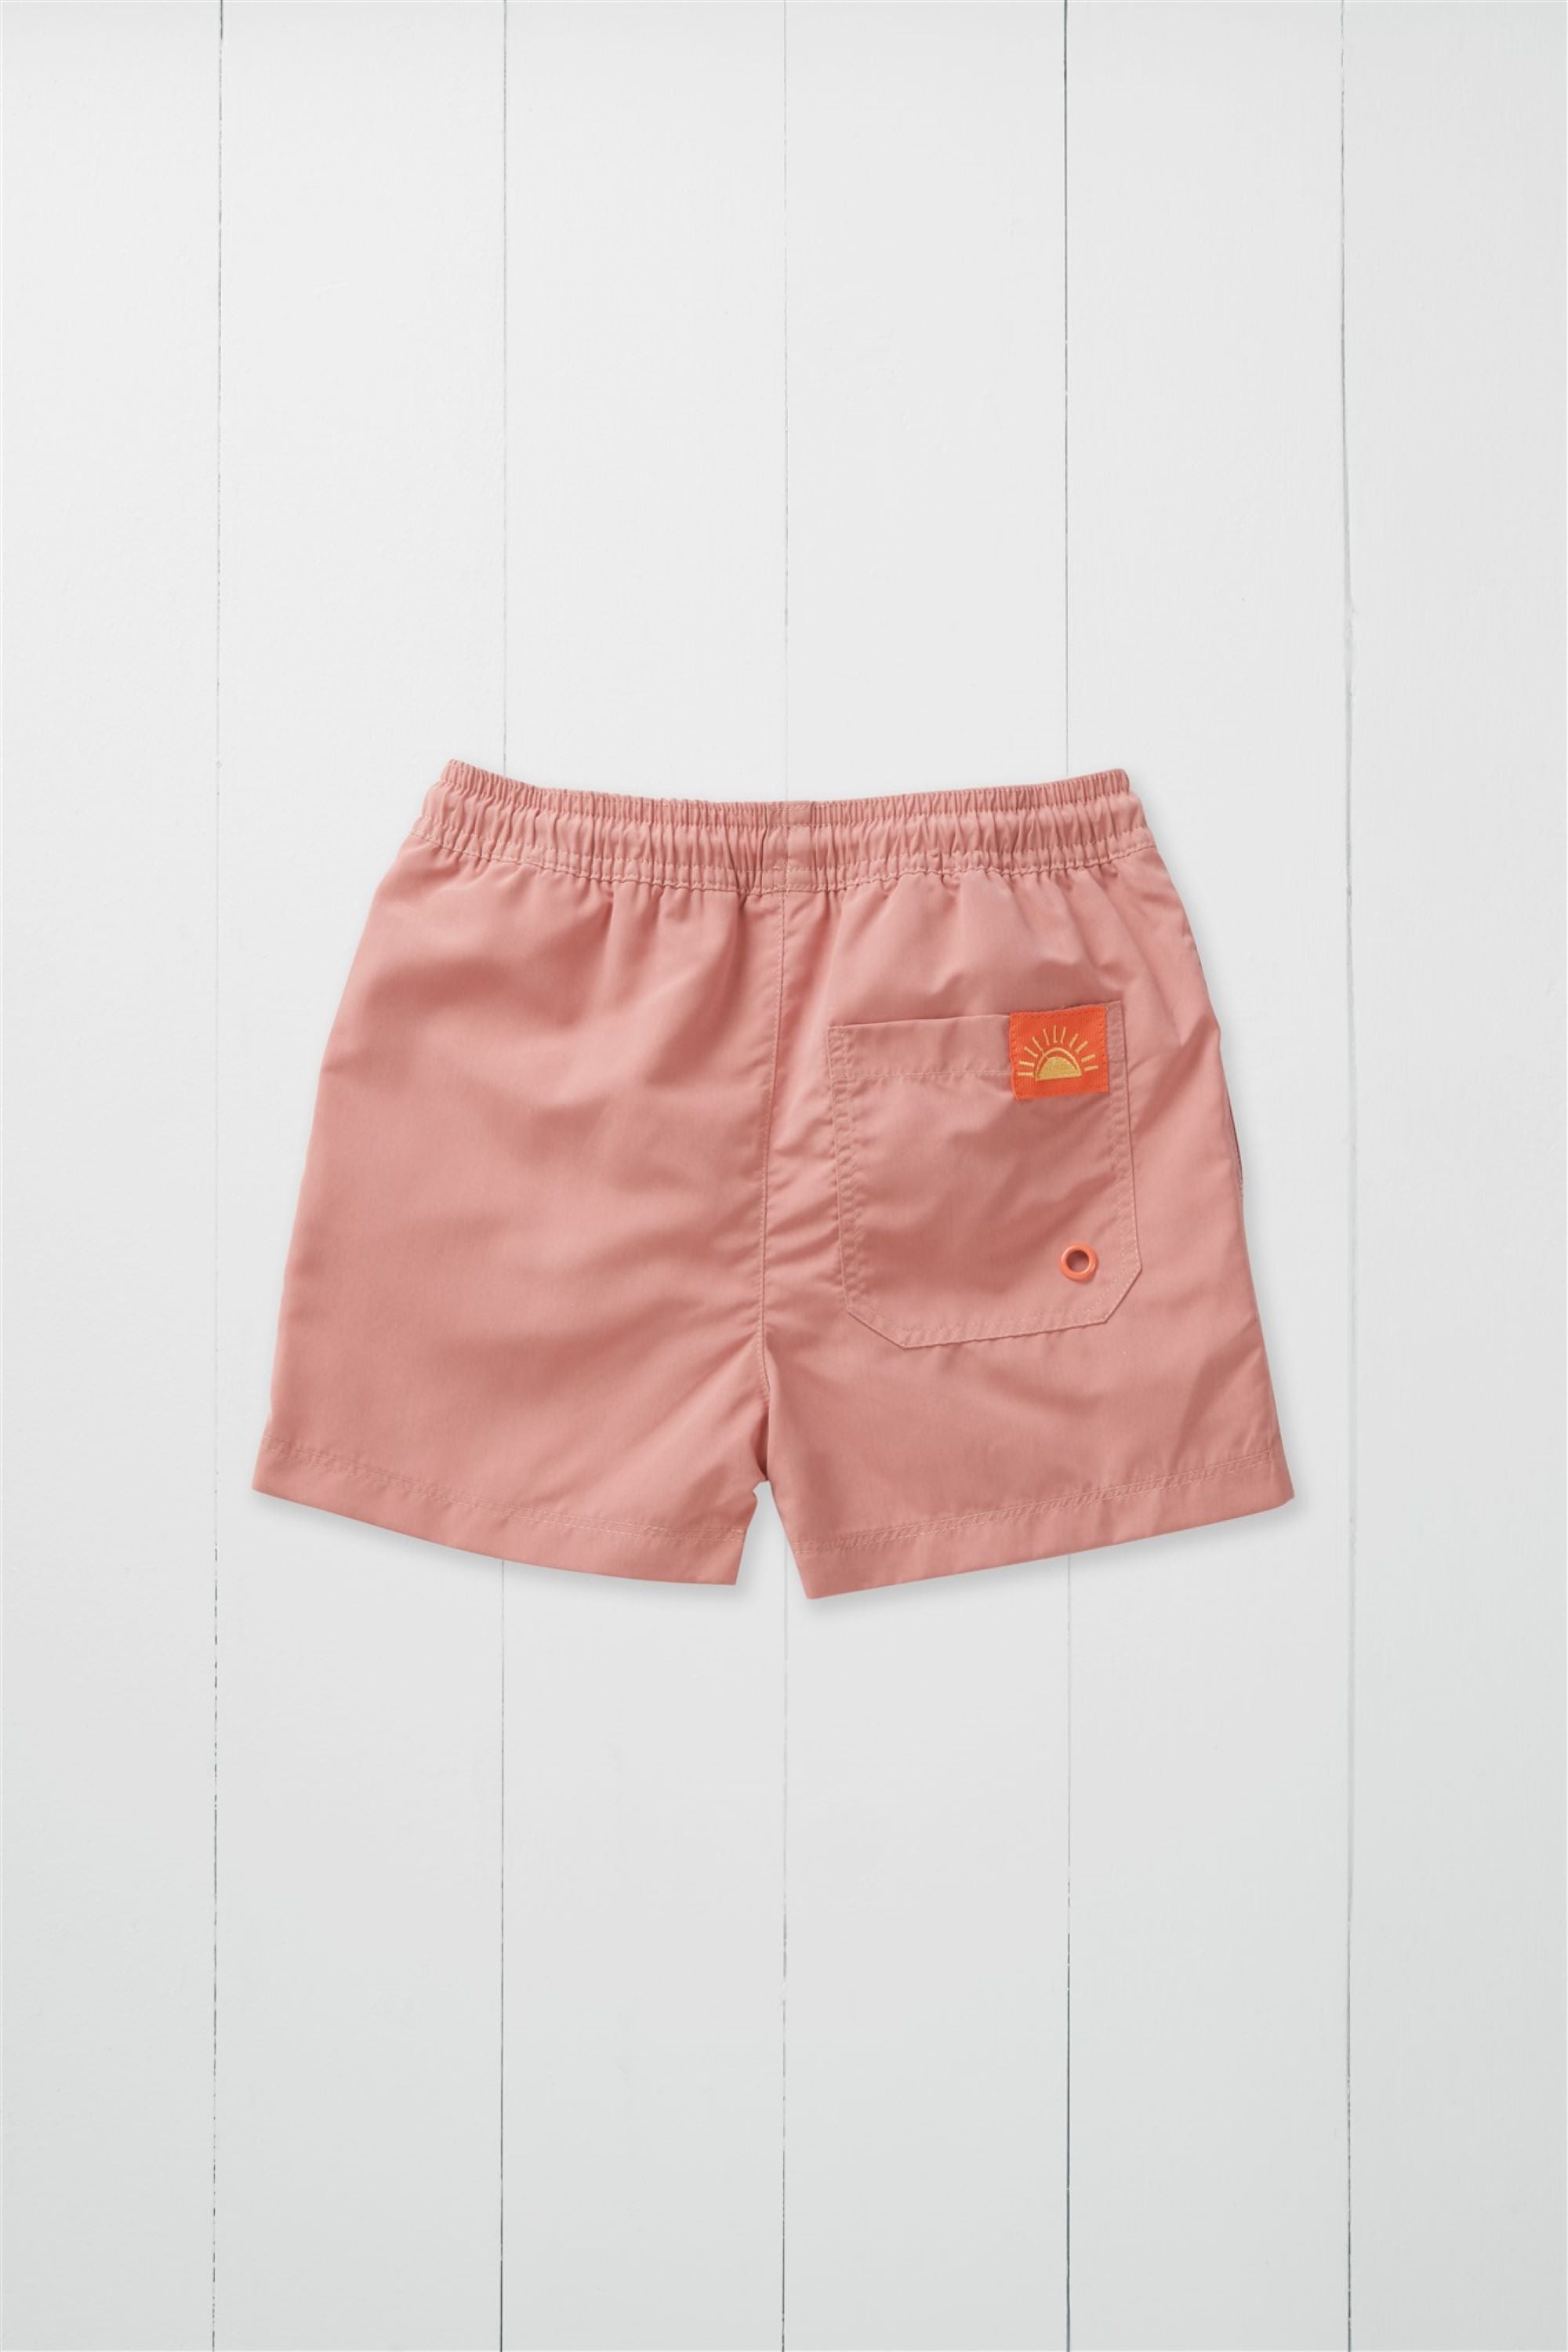 Rose Swim Shorts